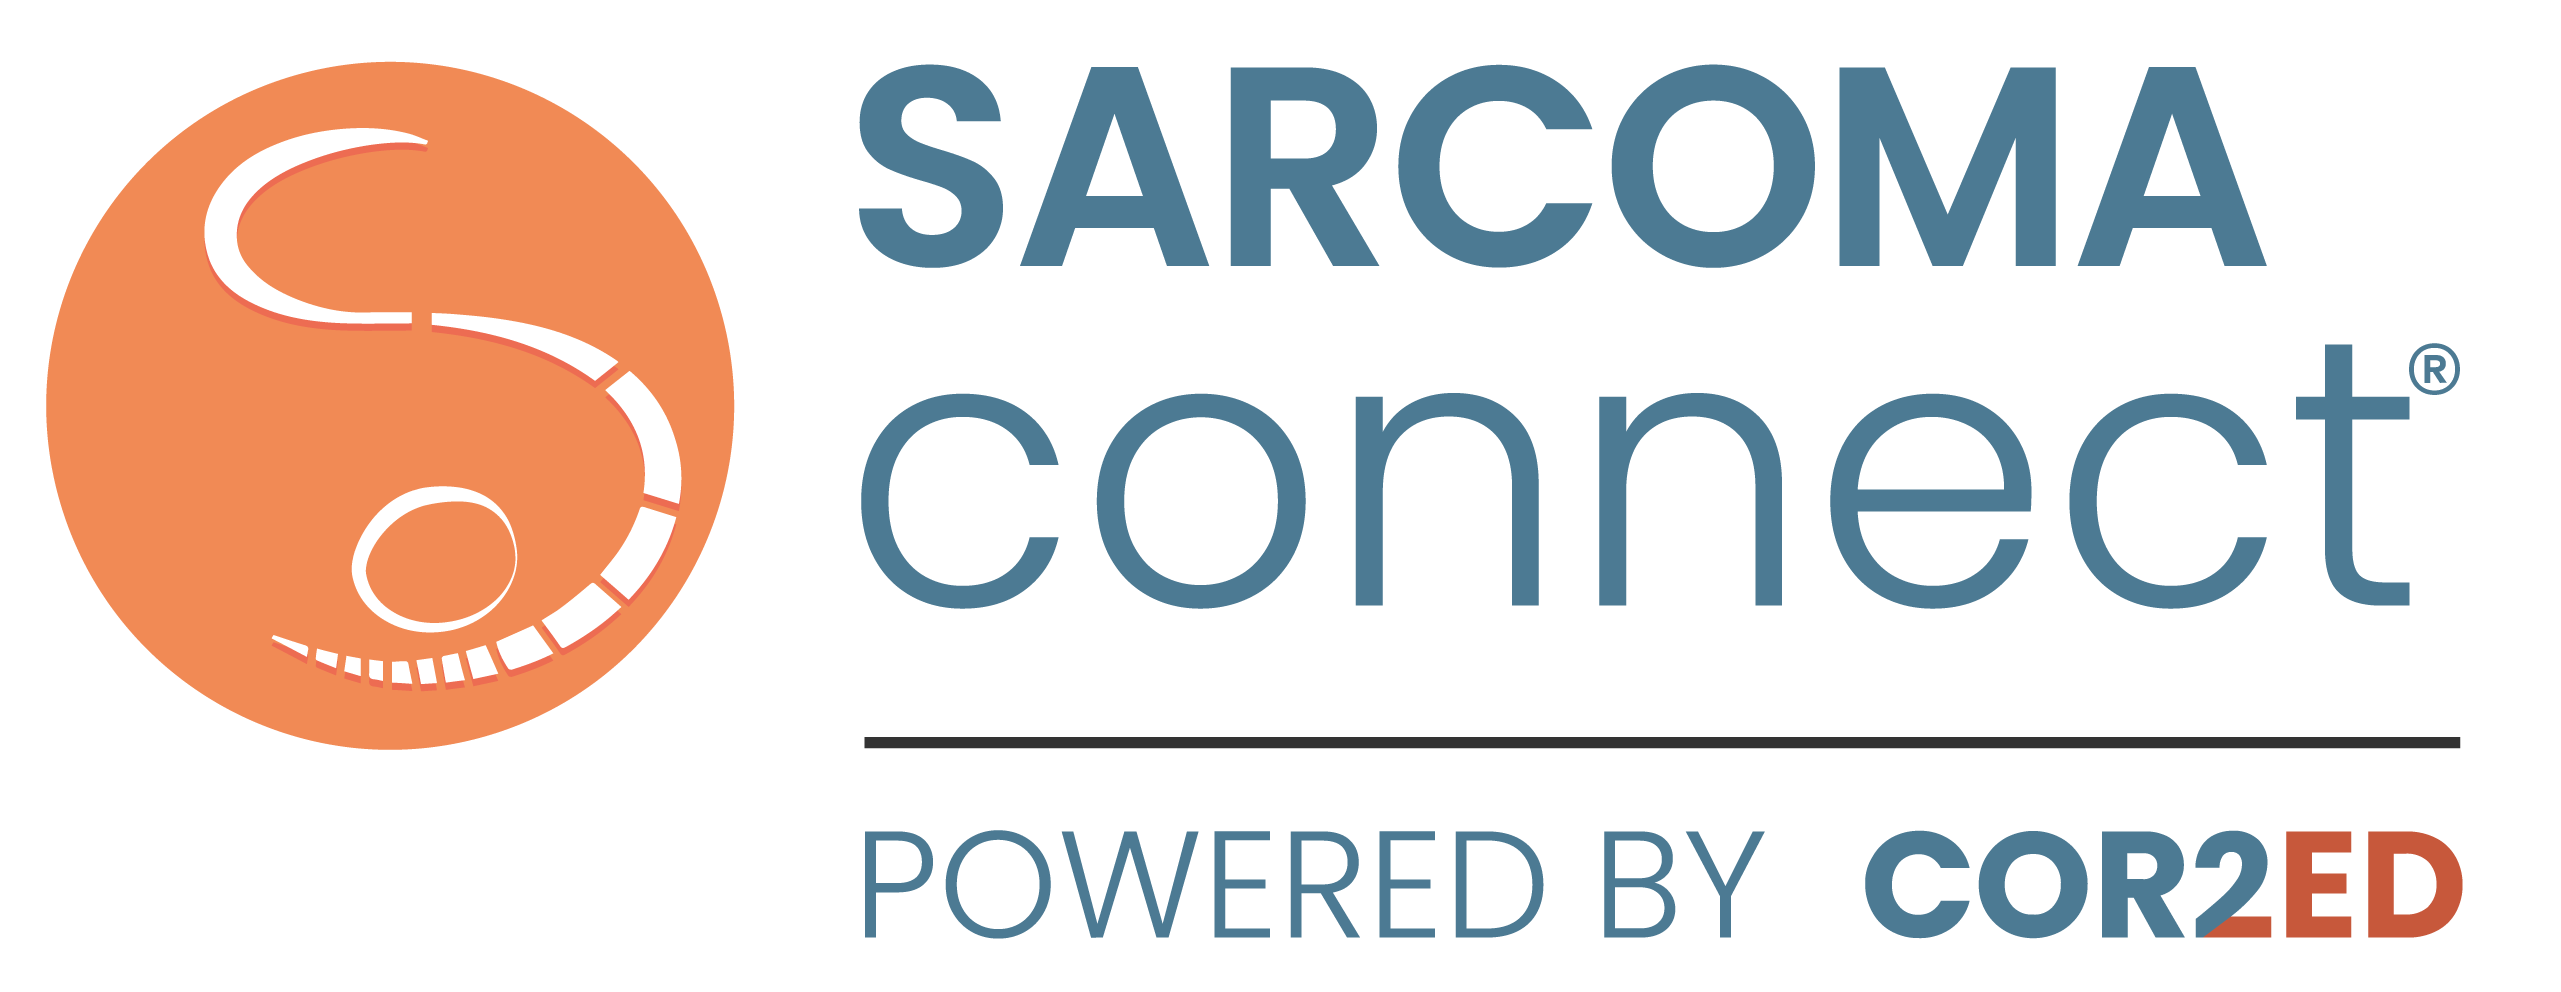 SARCOMA CONNECT